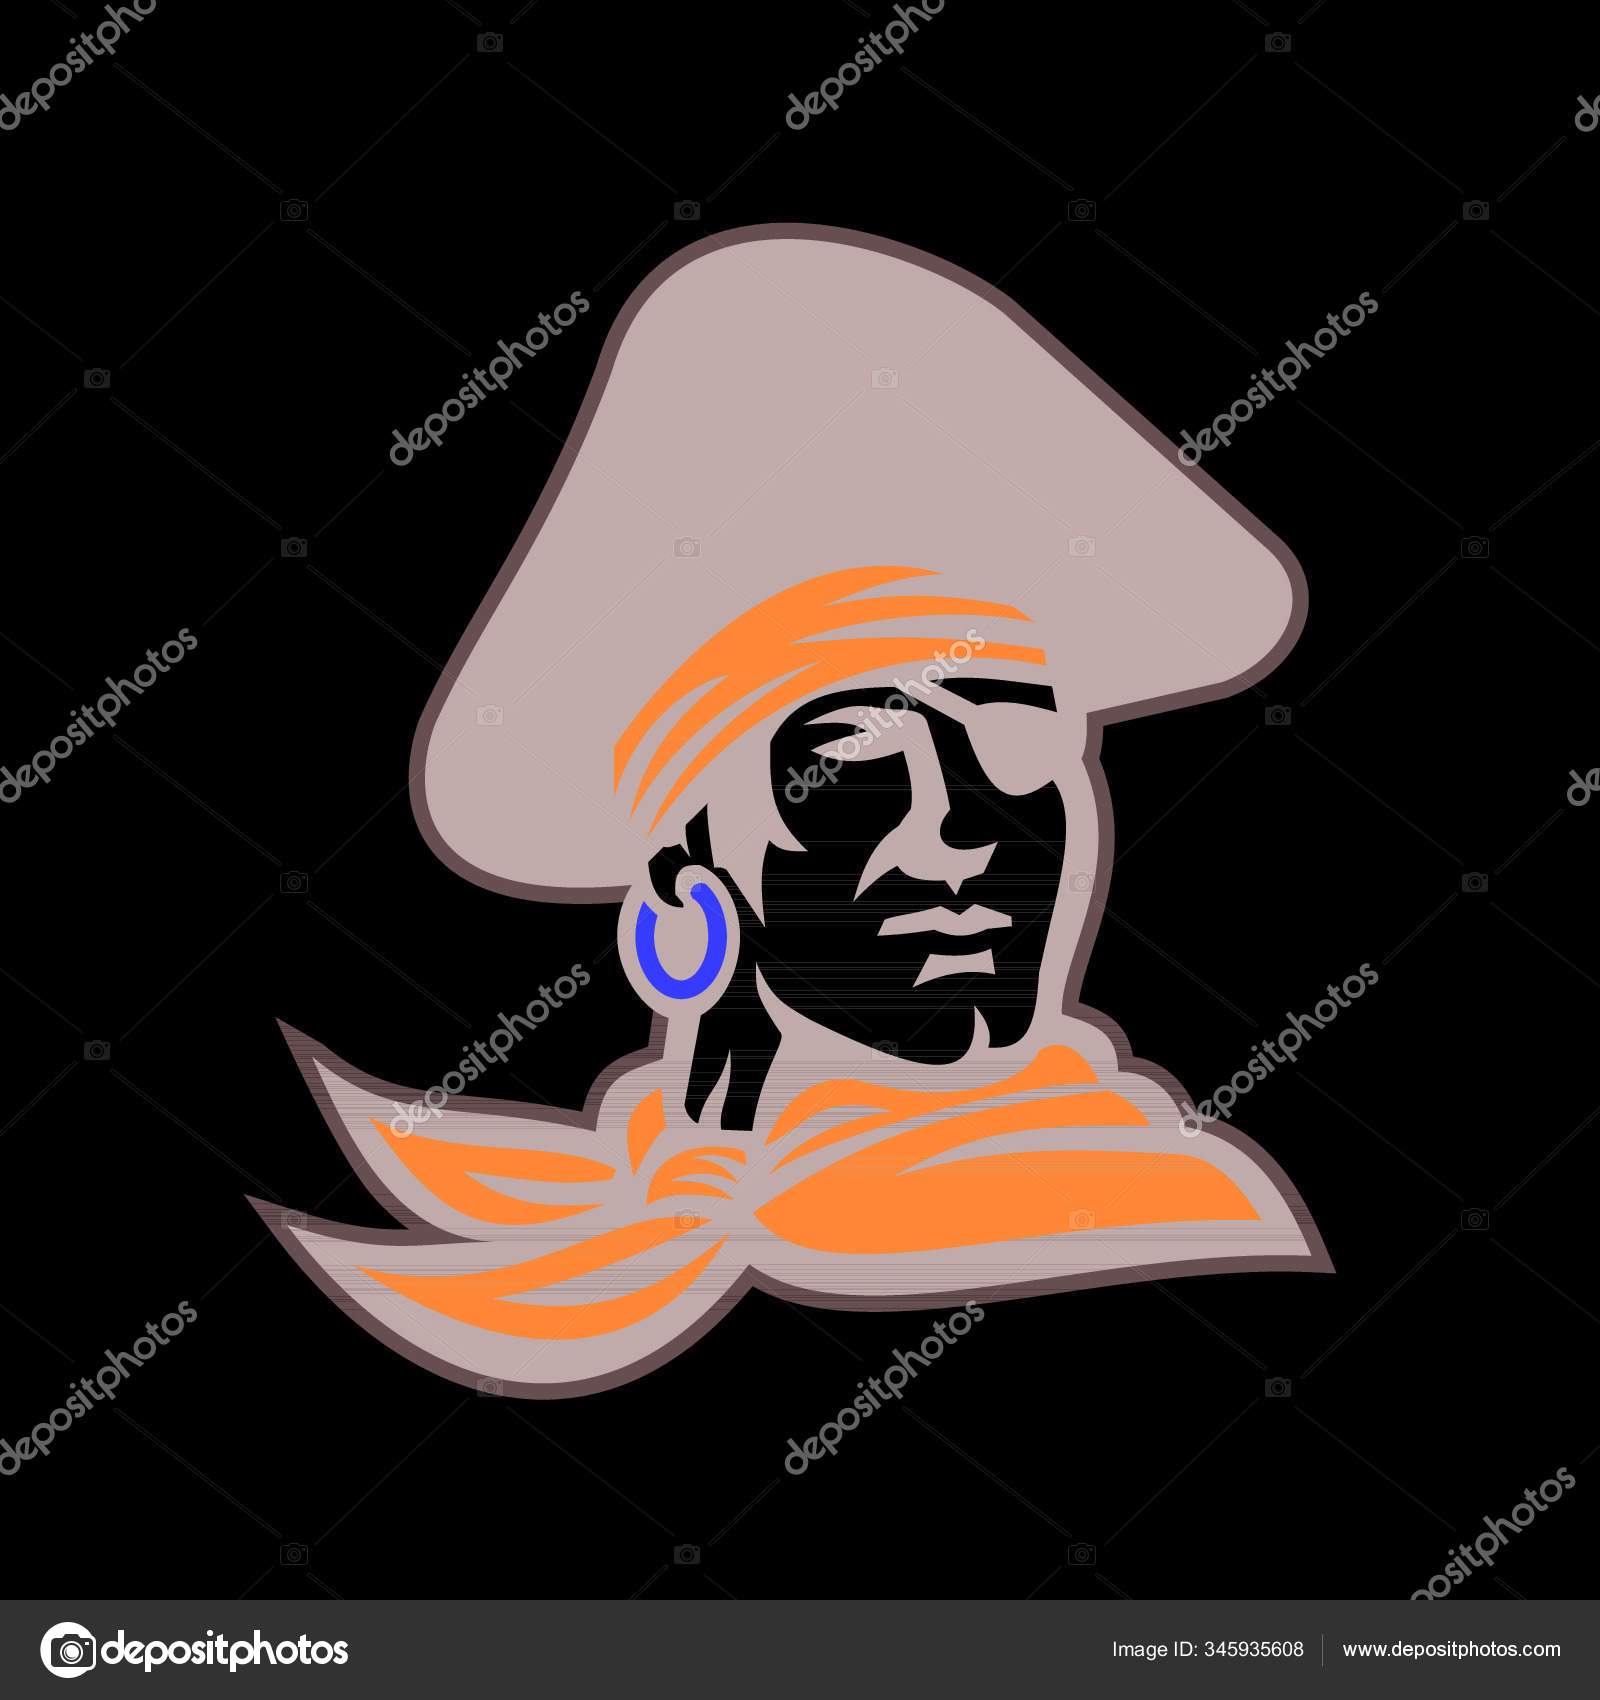 Pañuelo pirata de dibujos animados y tricornio marinero o sombrero